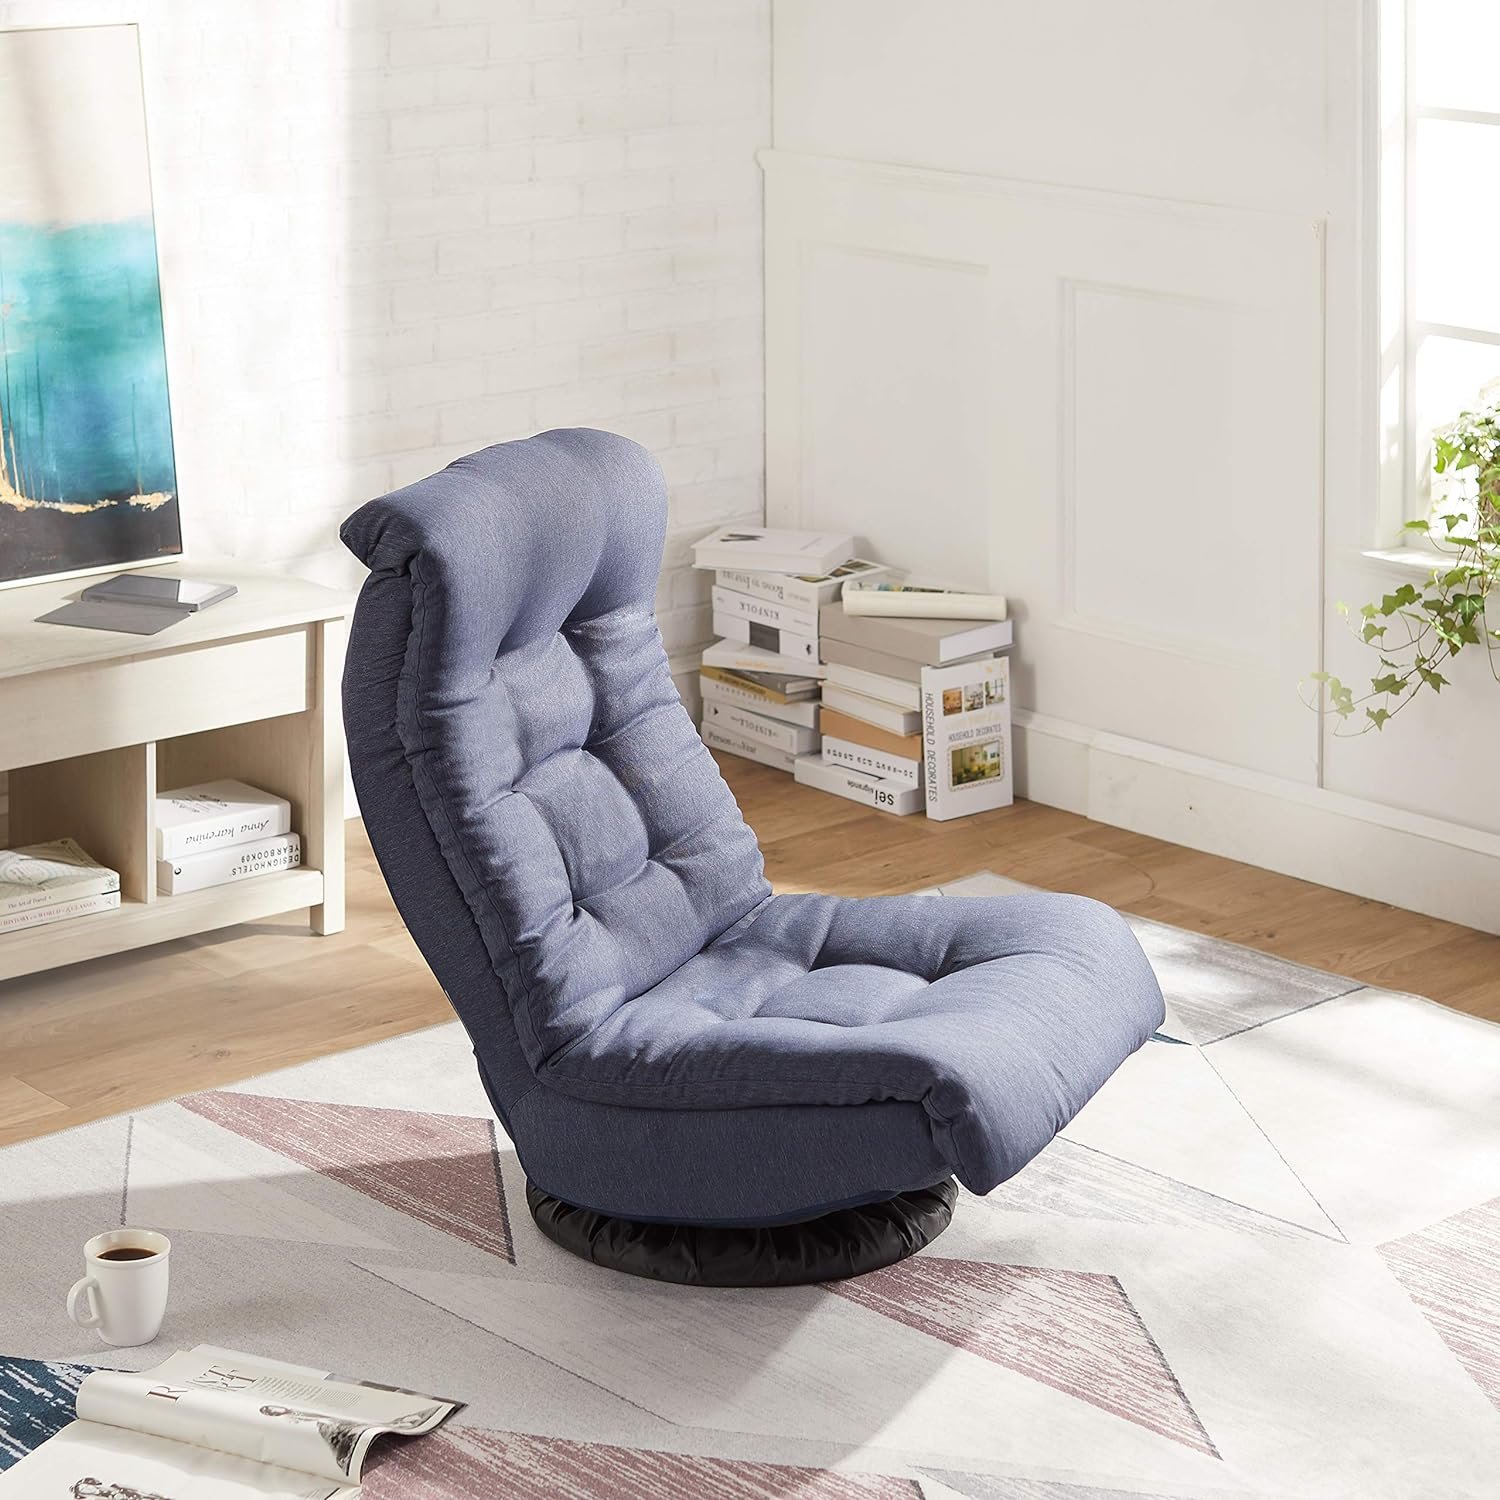 Amazon Basics Swivel Foam Lounge Chair Review